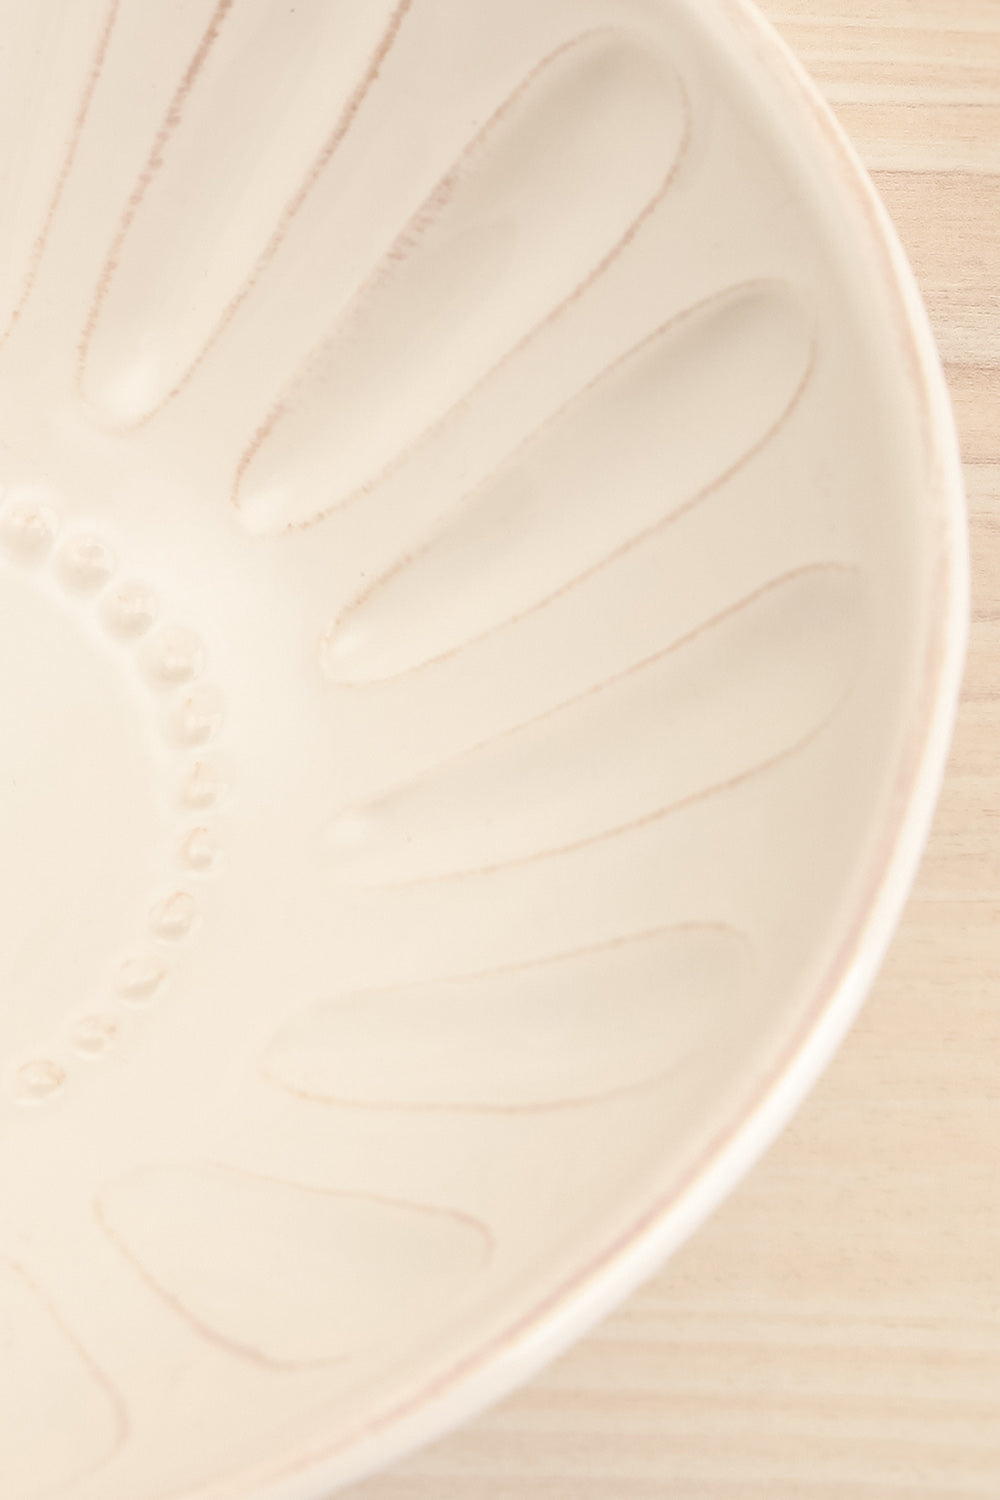 Herlev White Ceramic Bowl | La petite garçonne inside close-up